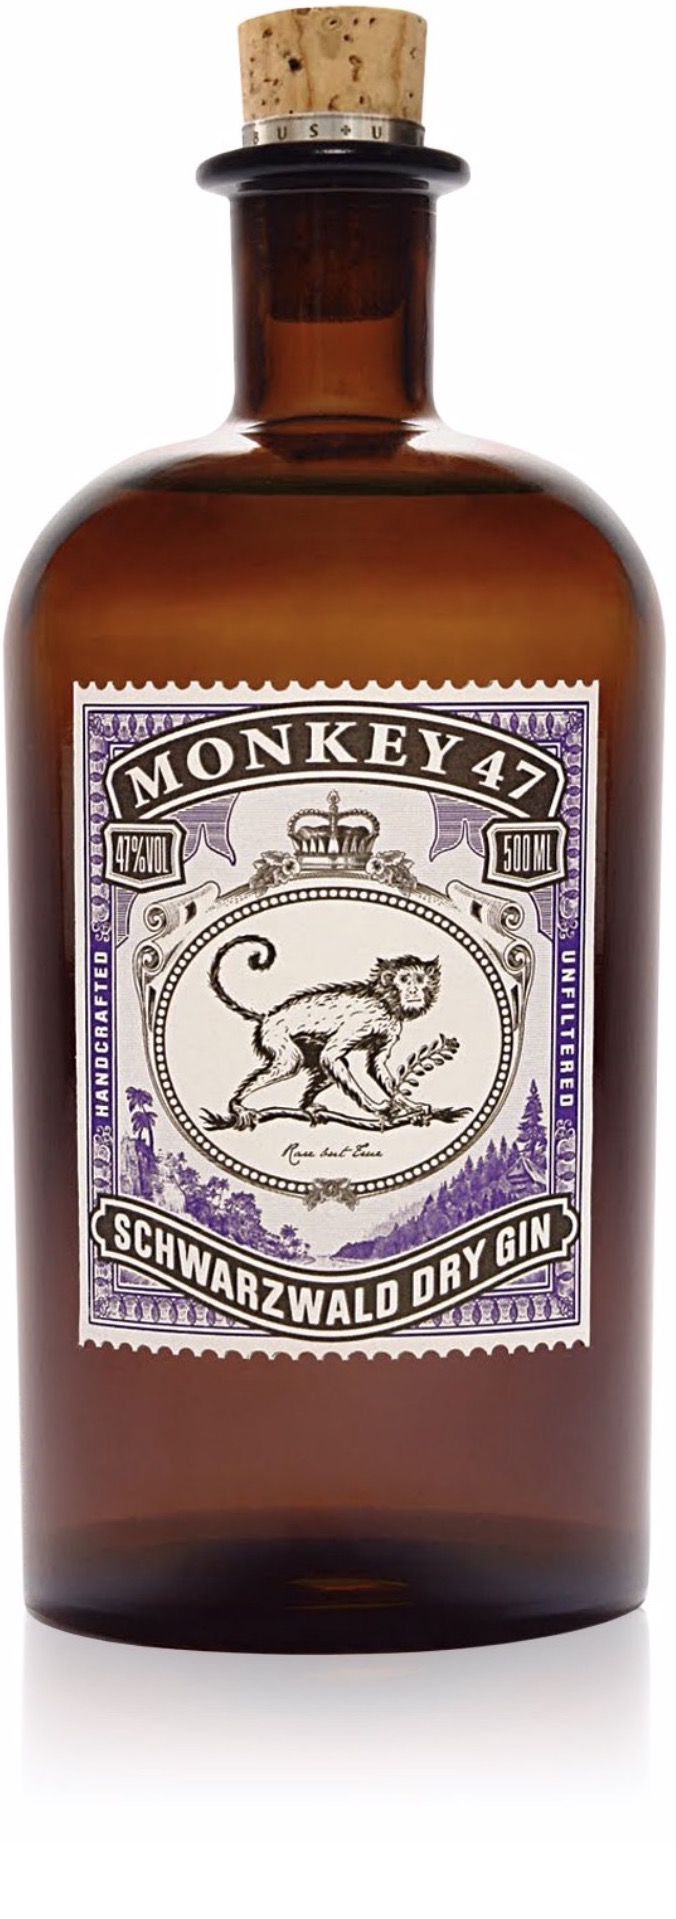 Monkey 47 Schwarzwald Dry Gin 47% vol. 0,5L